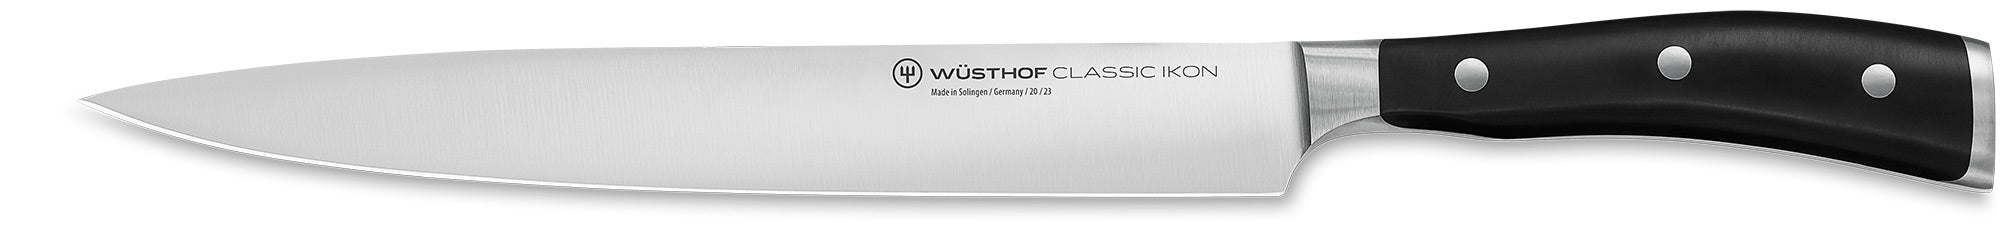 Wusthof Classic IKON 9-inch (23cm) Carving Knife - 4506-23 Canada